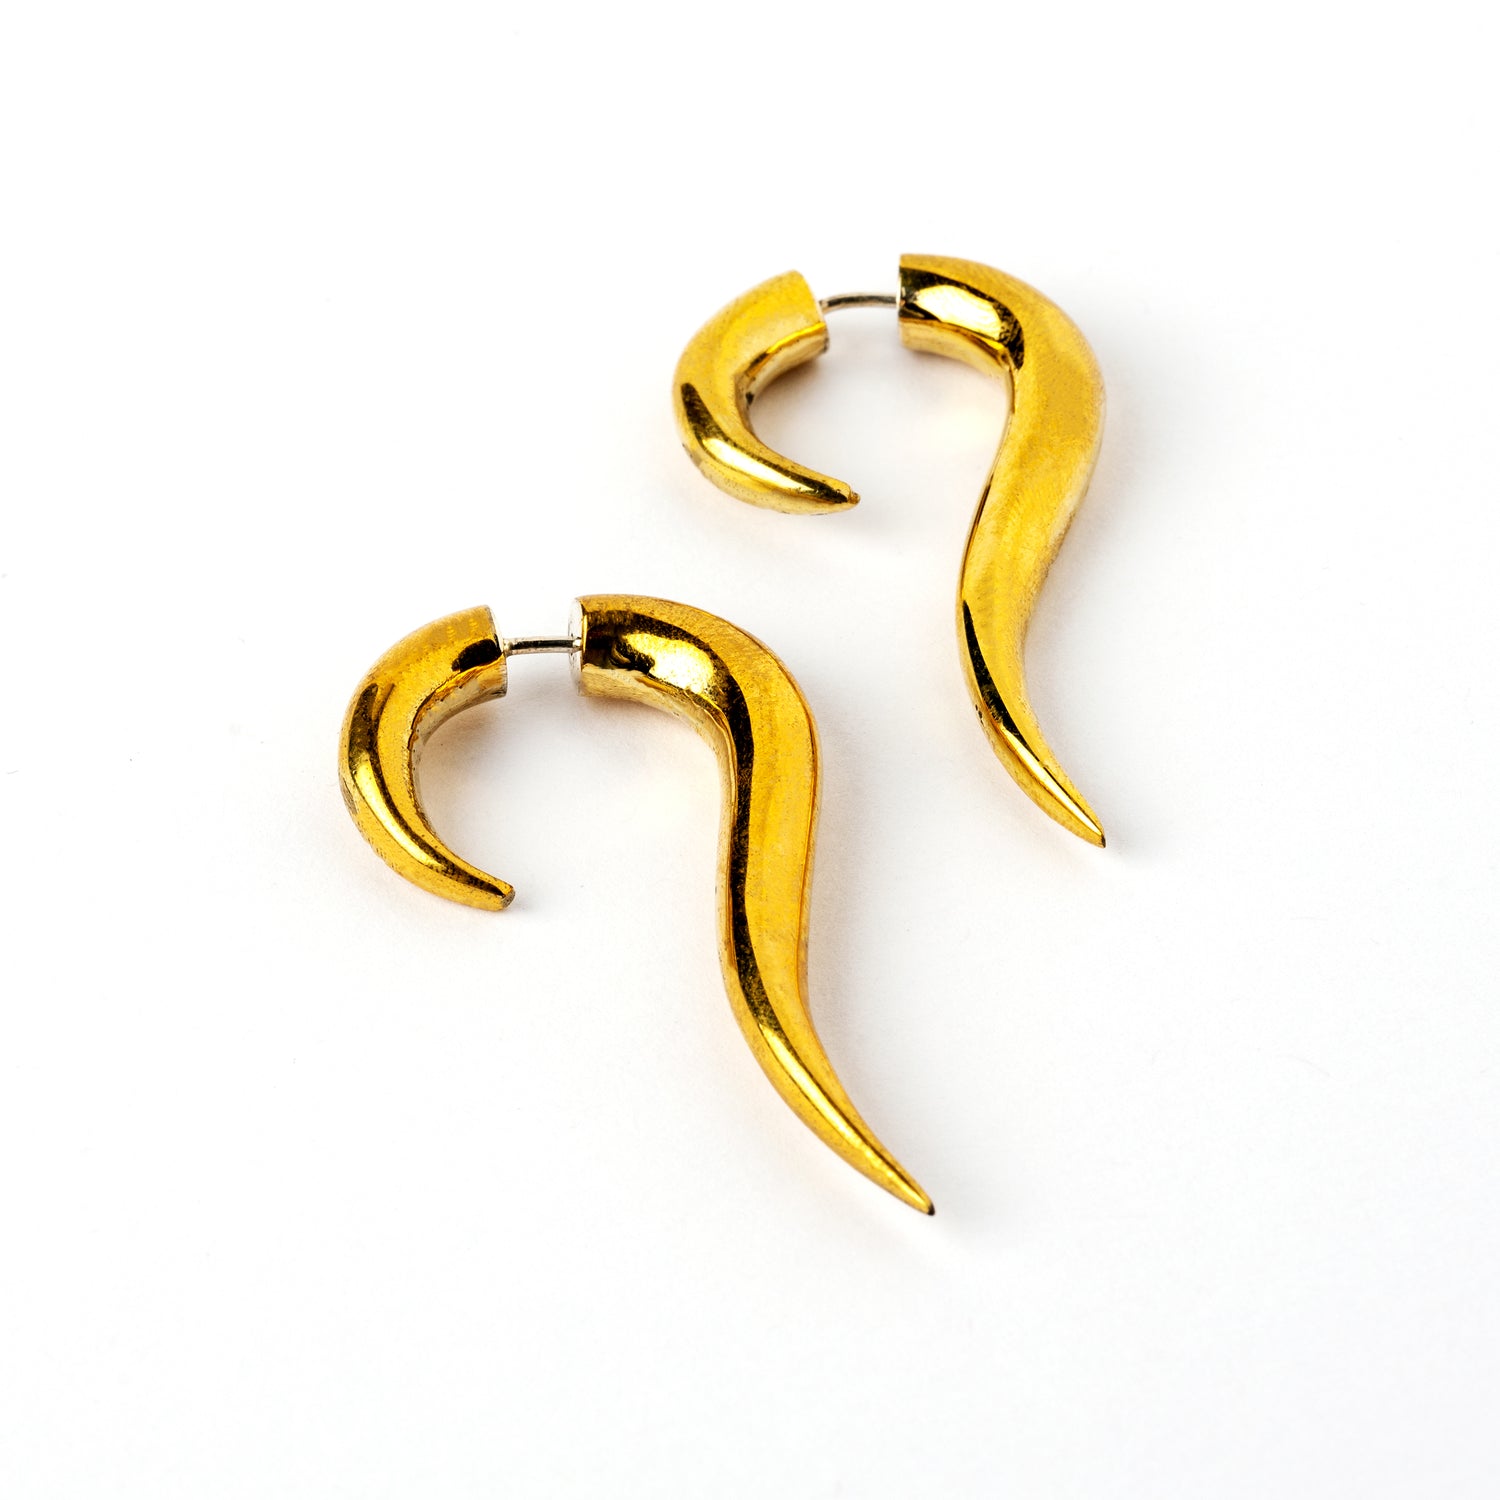 pair of Maui Gold Fake Gauge Earrings side view